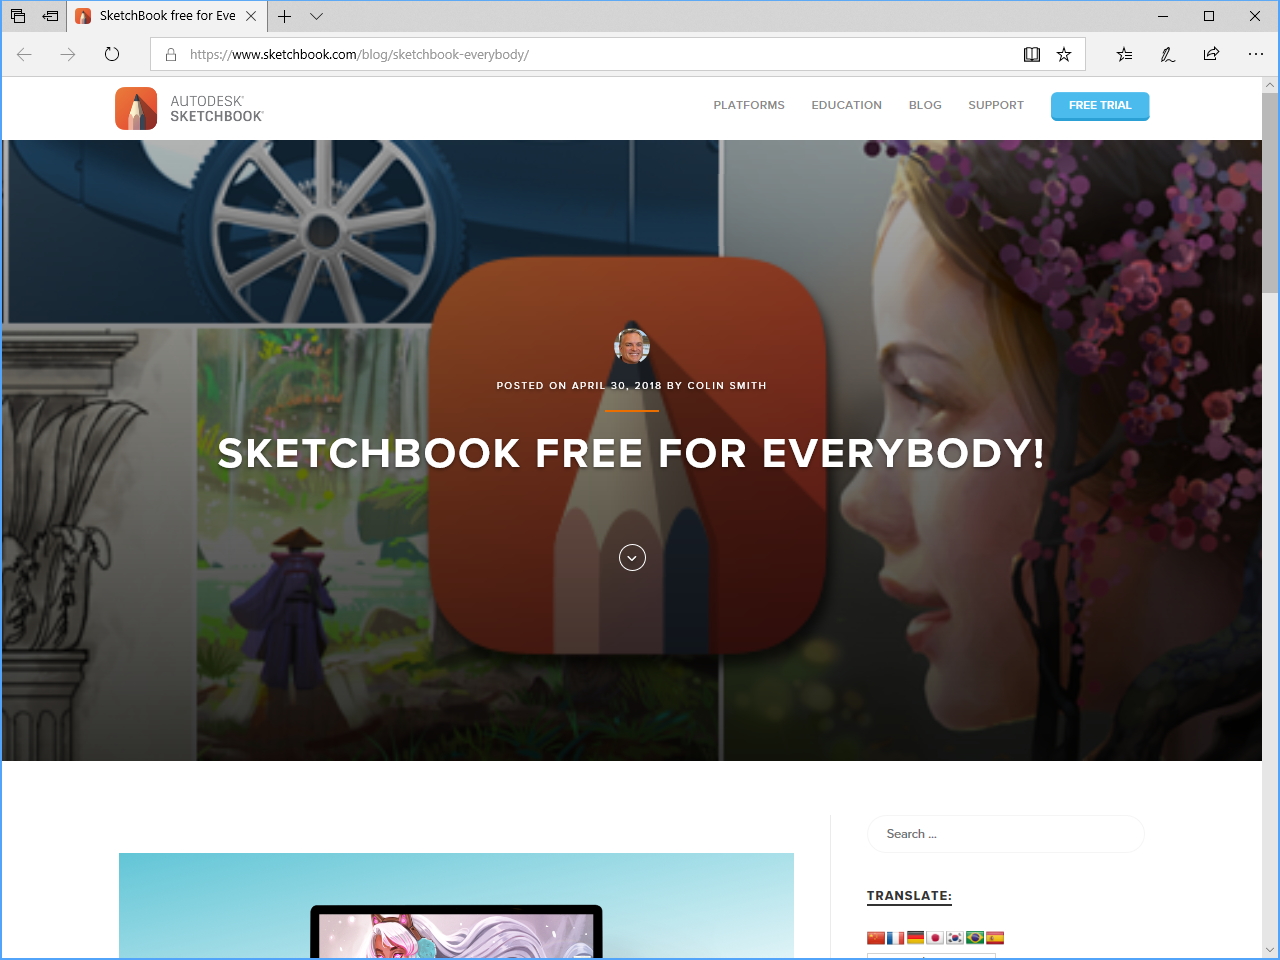 Autodesk アイデアスケッチアプリ Sketchbook の全機能を無償に 窓の杜